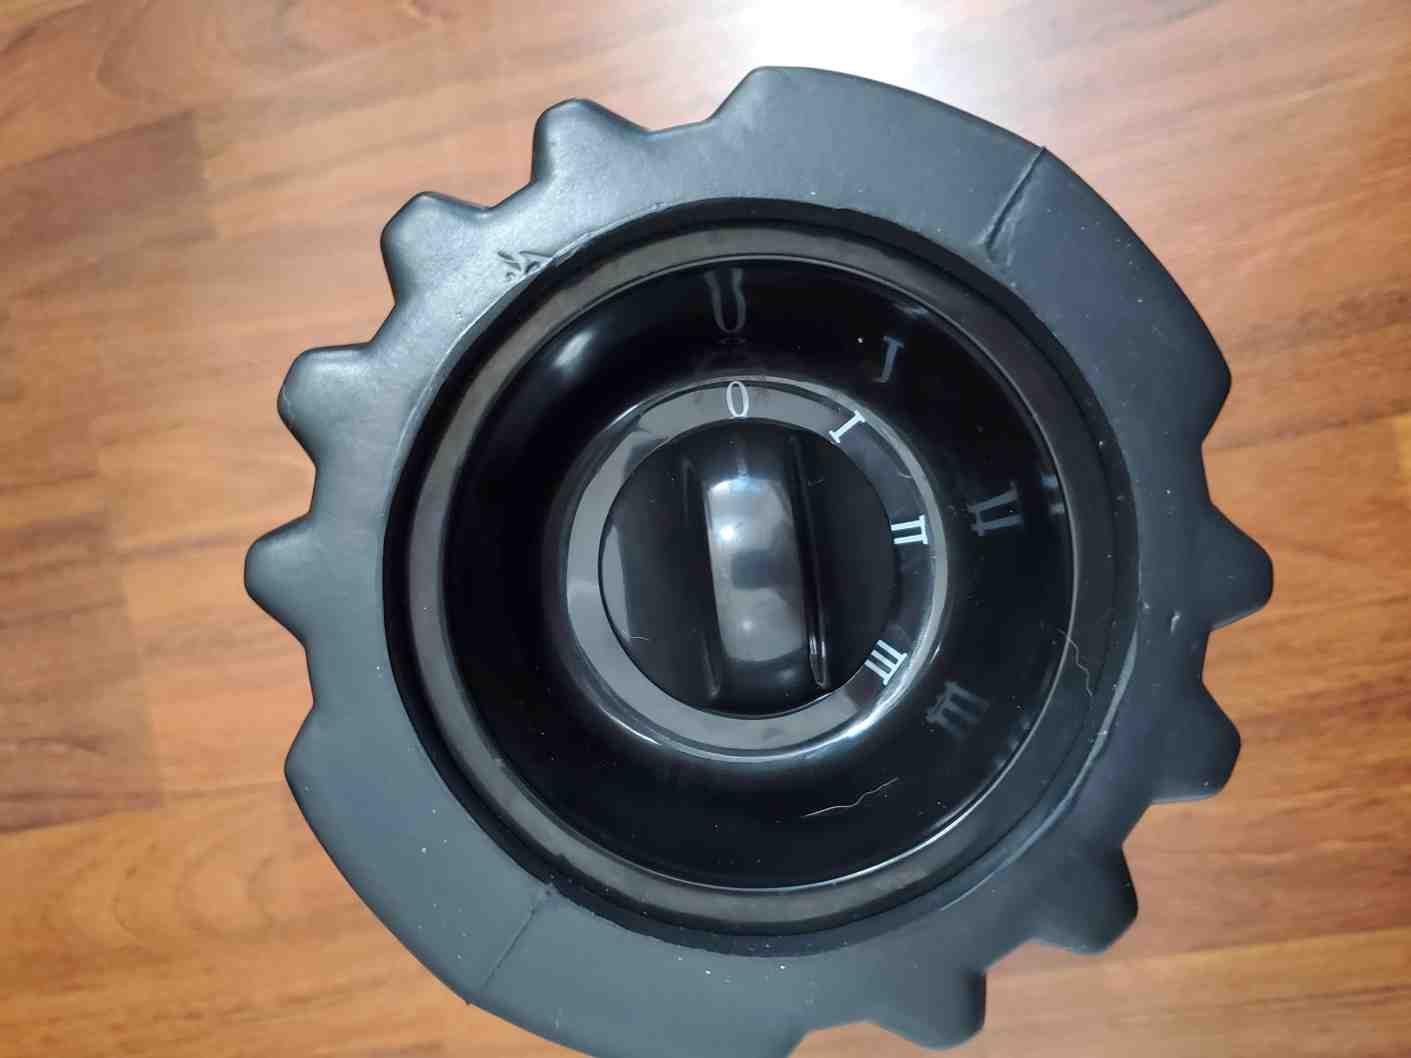 Speed Selection on NextRoller Vibrating Foam Roller